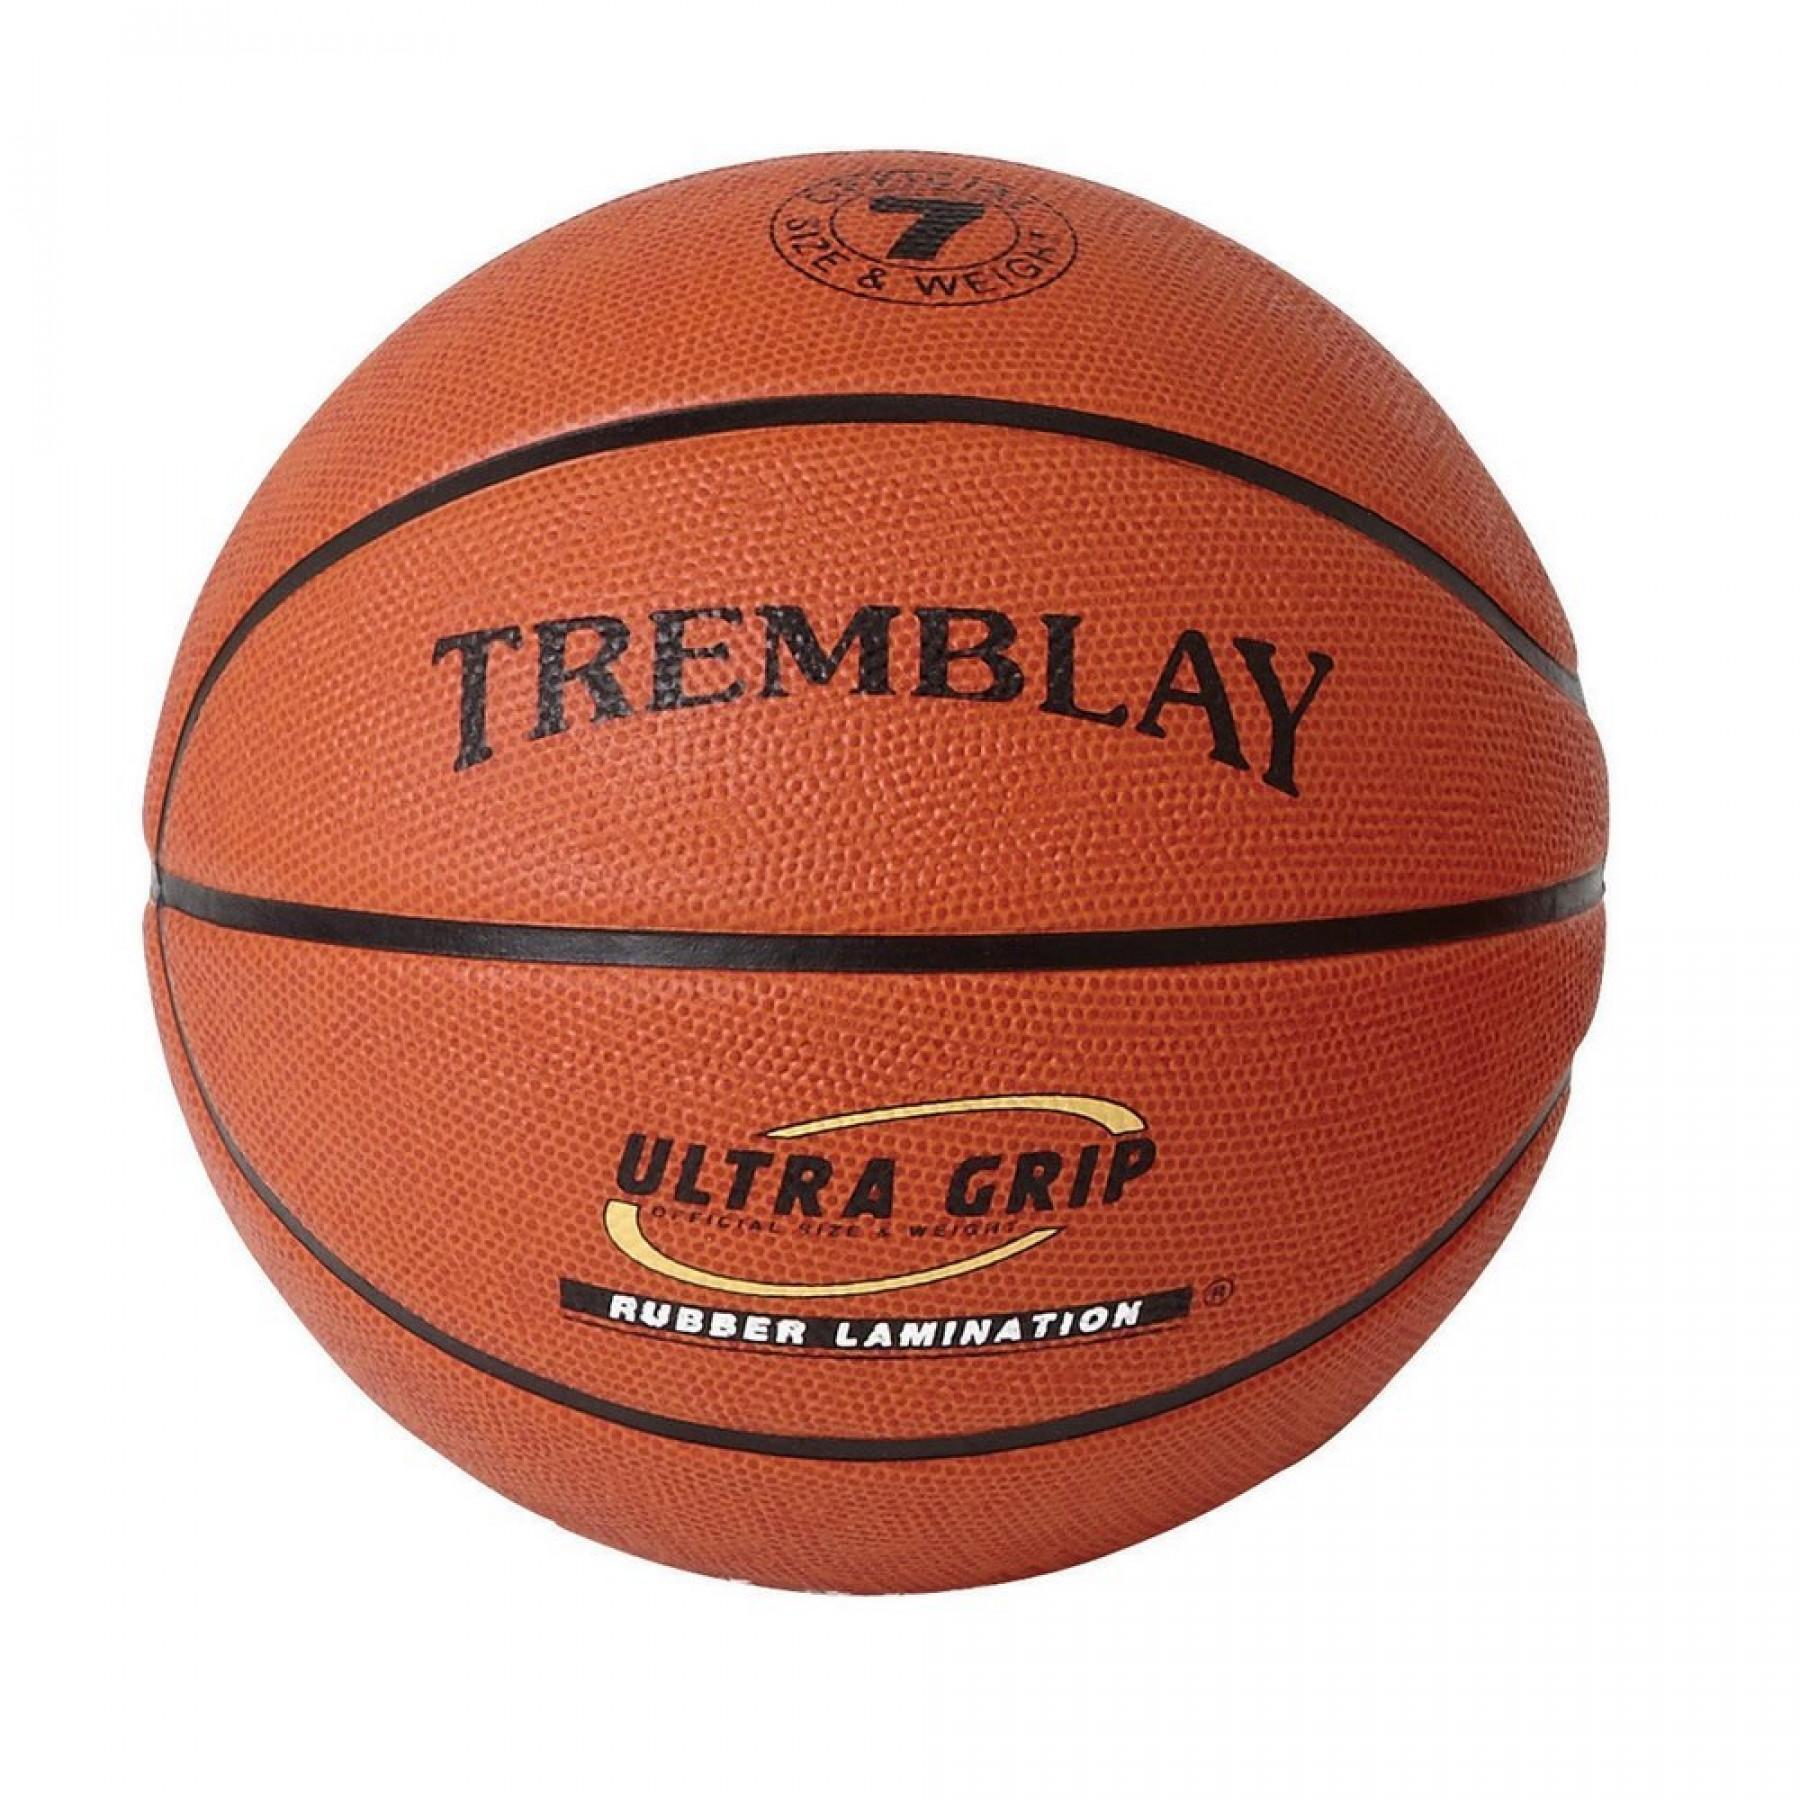 Extra tung tremblay basketboll